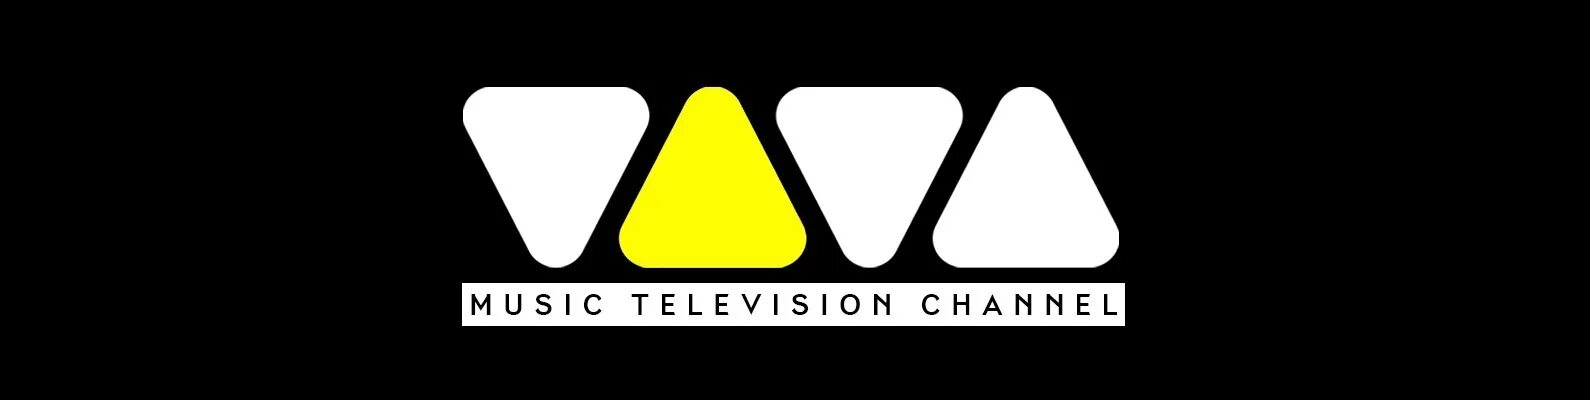 Где музыкальный канал. Viva Телеканал. Viva музыкальный канал. Viva логотип канала. Логотип мшмфч.